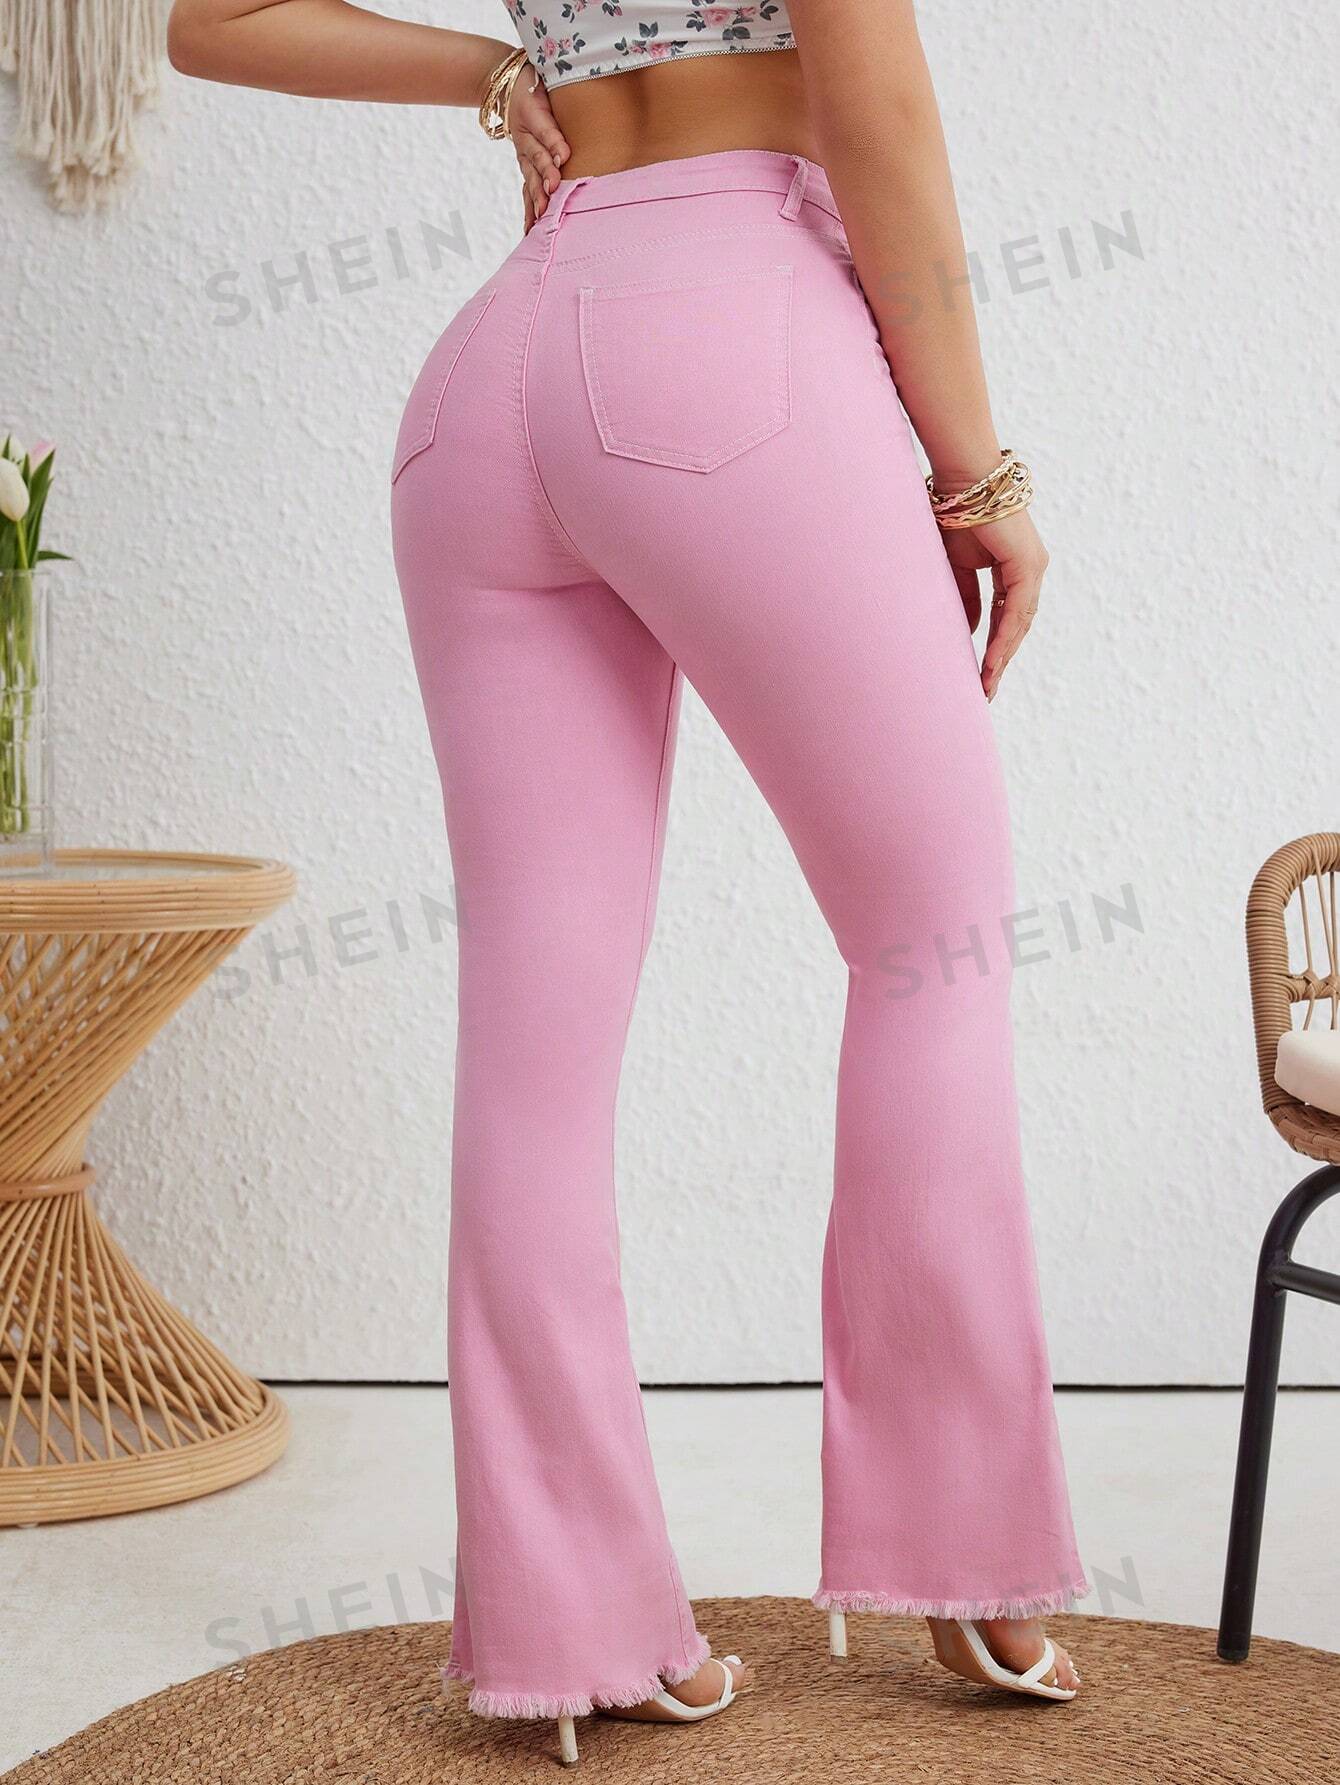 SHEIN VCAY Женские зауженные расклешенные джинсы, розовый shein vcay женские зауженные расклешенные джинсы розовый